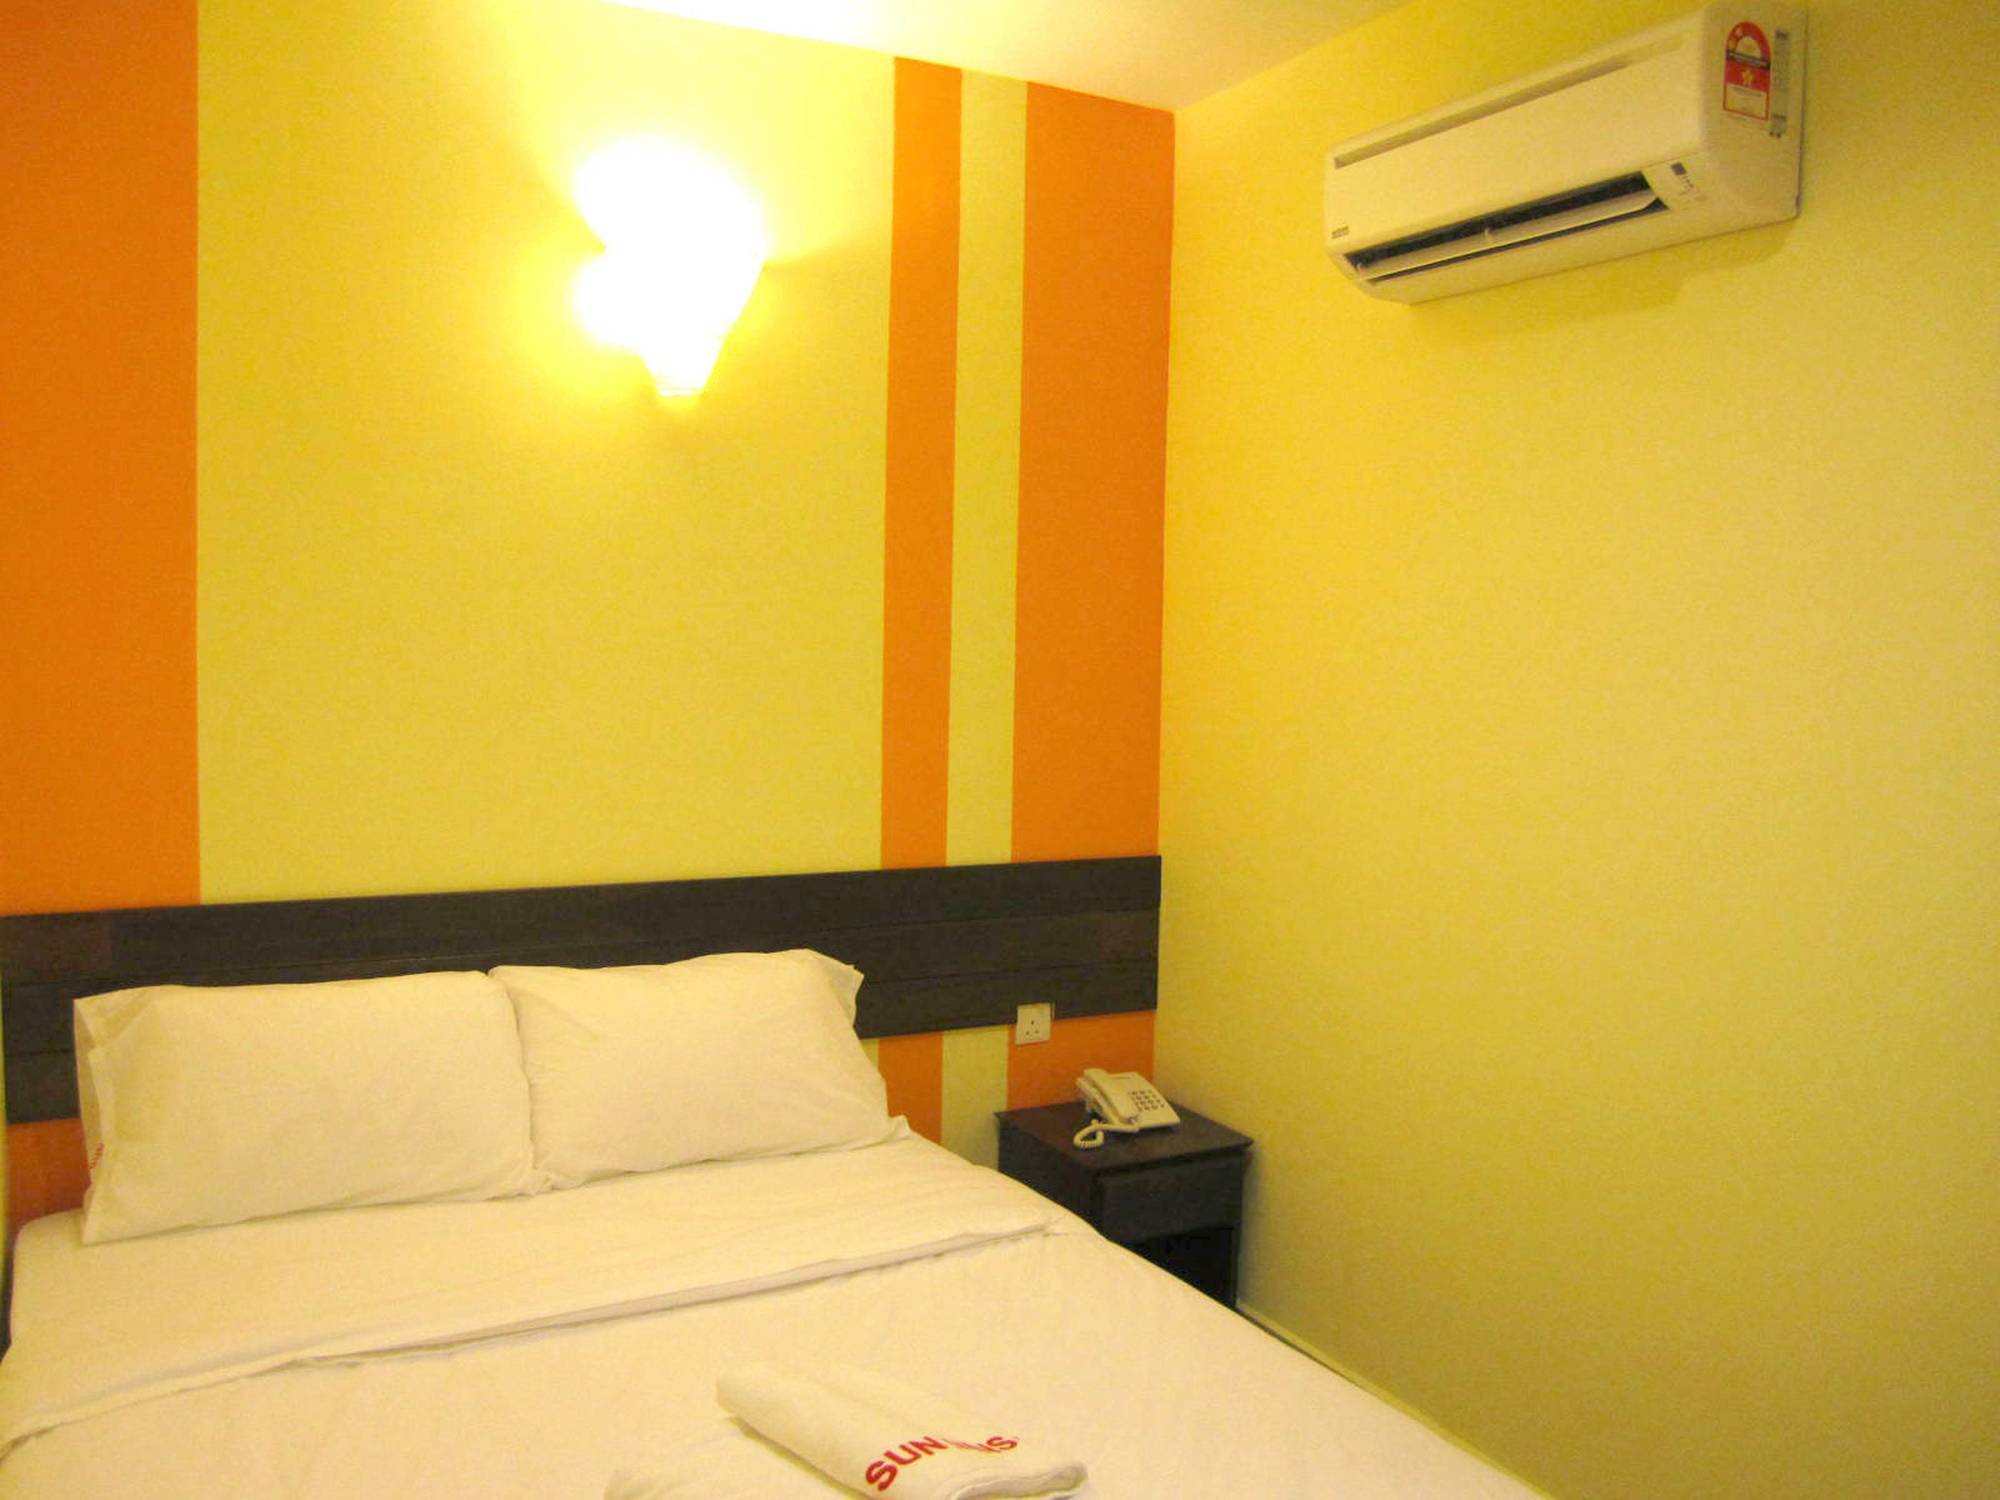 Sun Inns Hotel Sentral, Brickfields Kuala Lumpur Zewnętrze zdjęcie